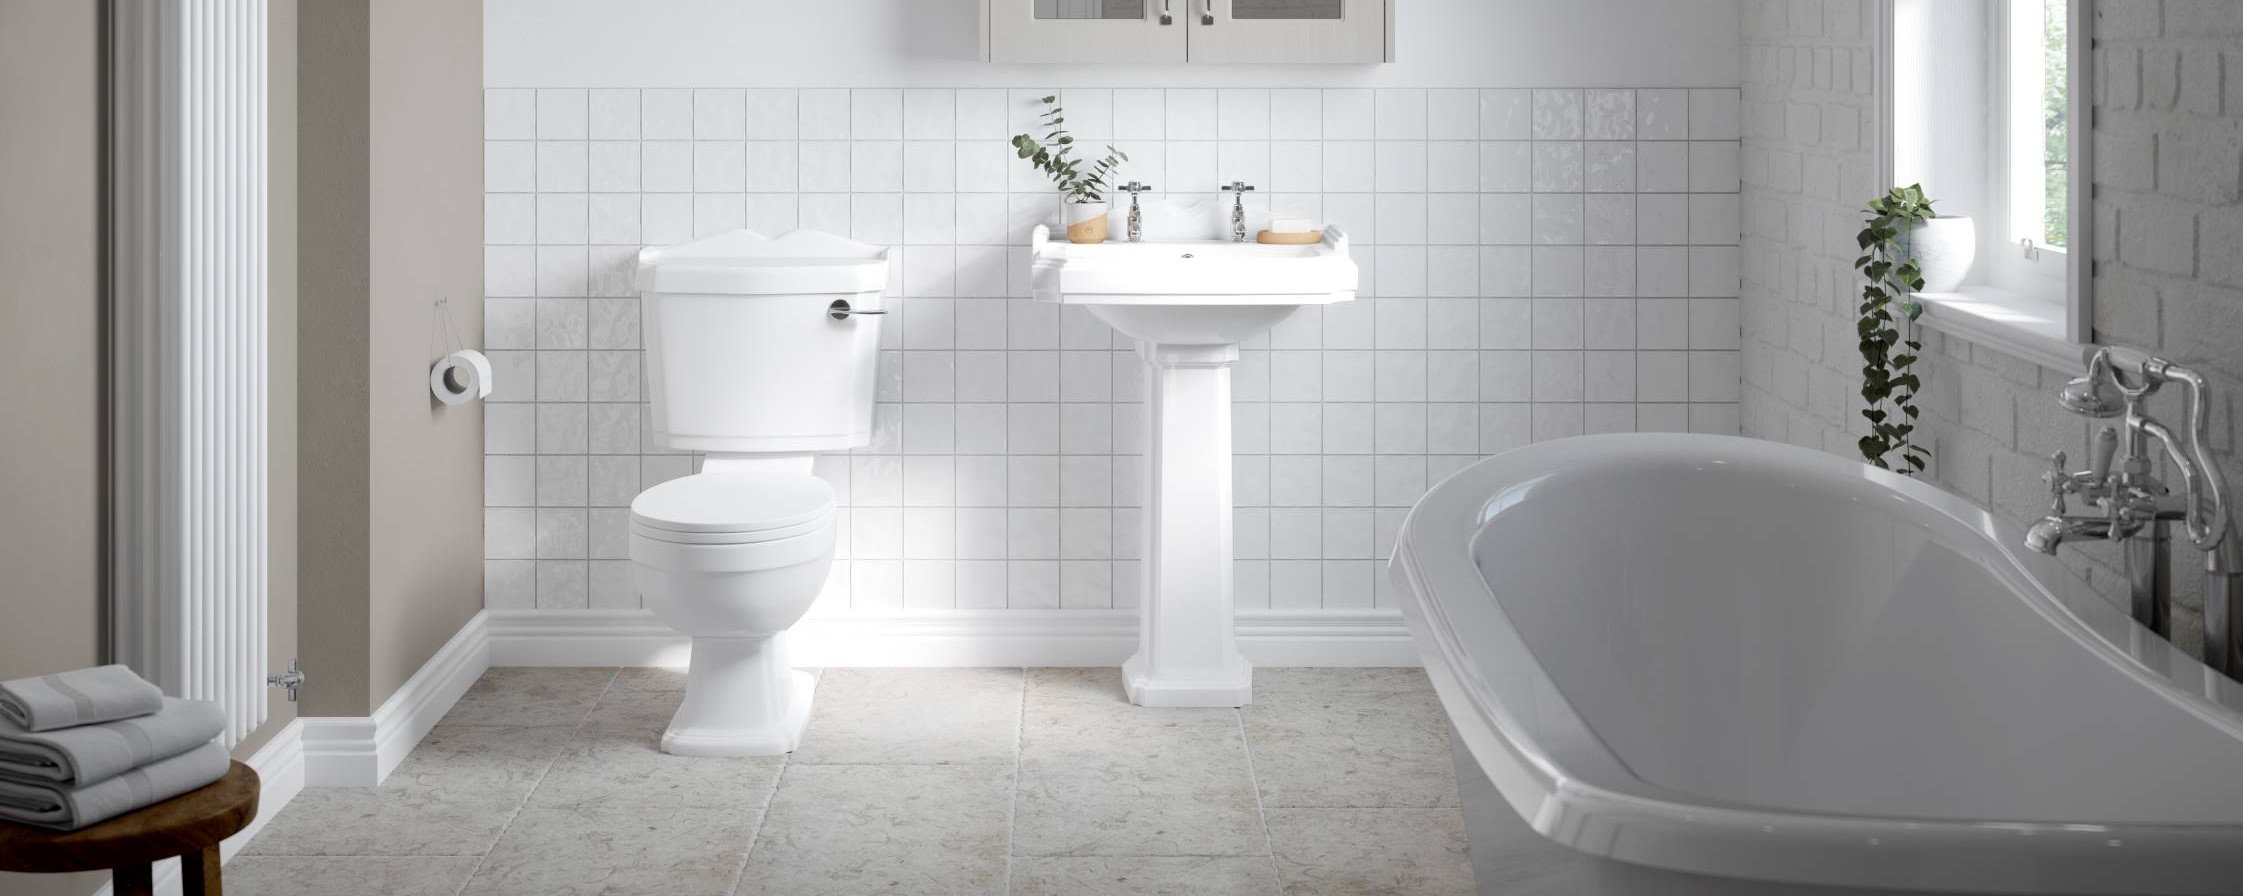 Small White Bathroom Ideas and Design Inspiration